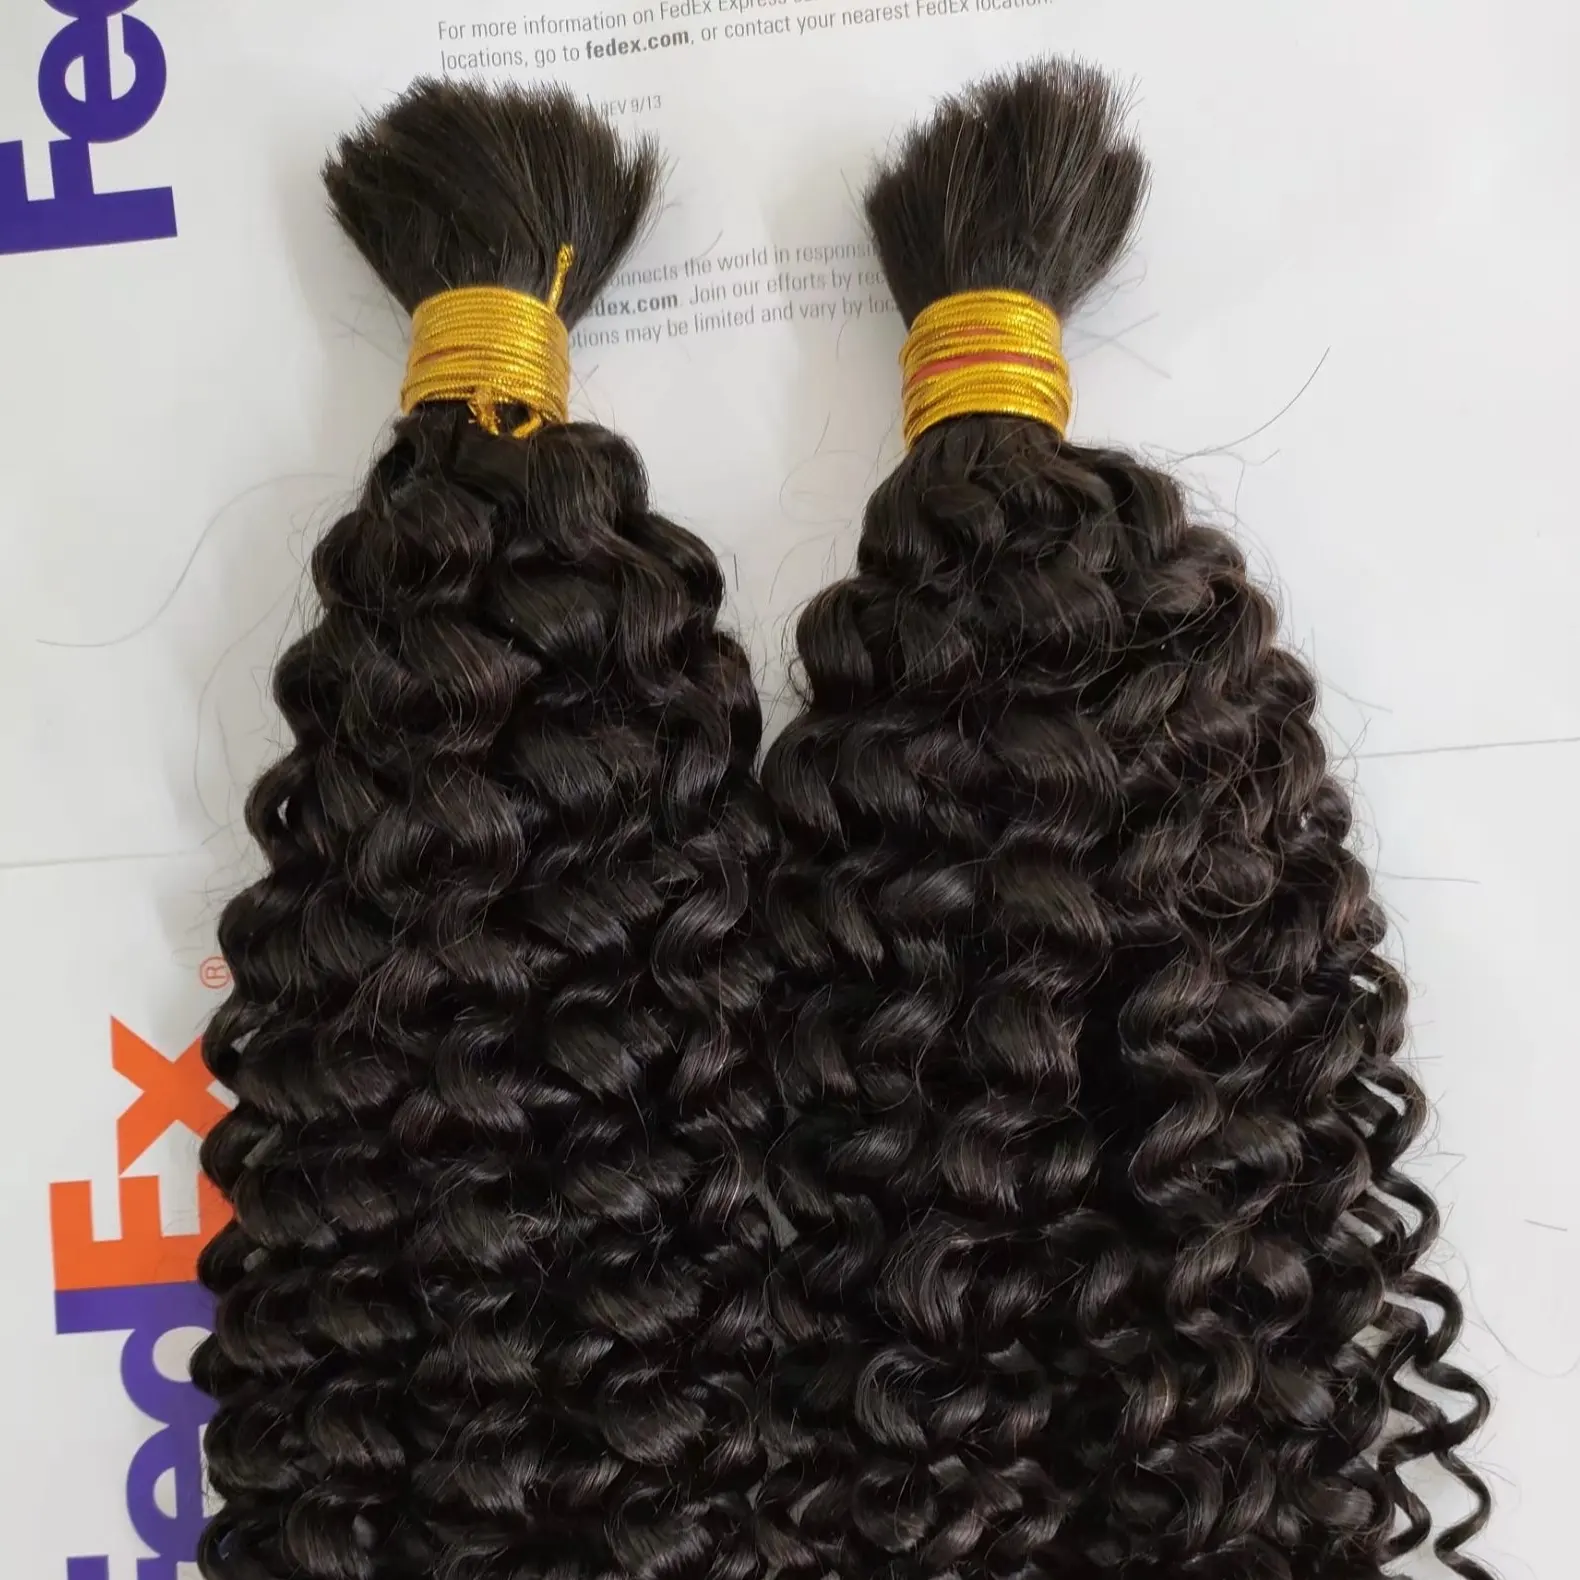 Amara Best Sale Perruques Naturel Cheveux Humain En Gros 12A Grade Cabello indio Virgen sin procesar Cabello humano a granel